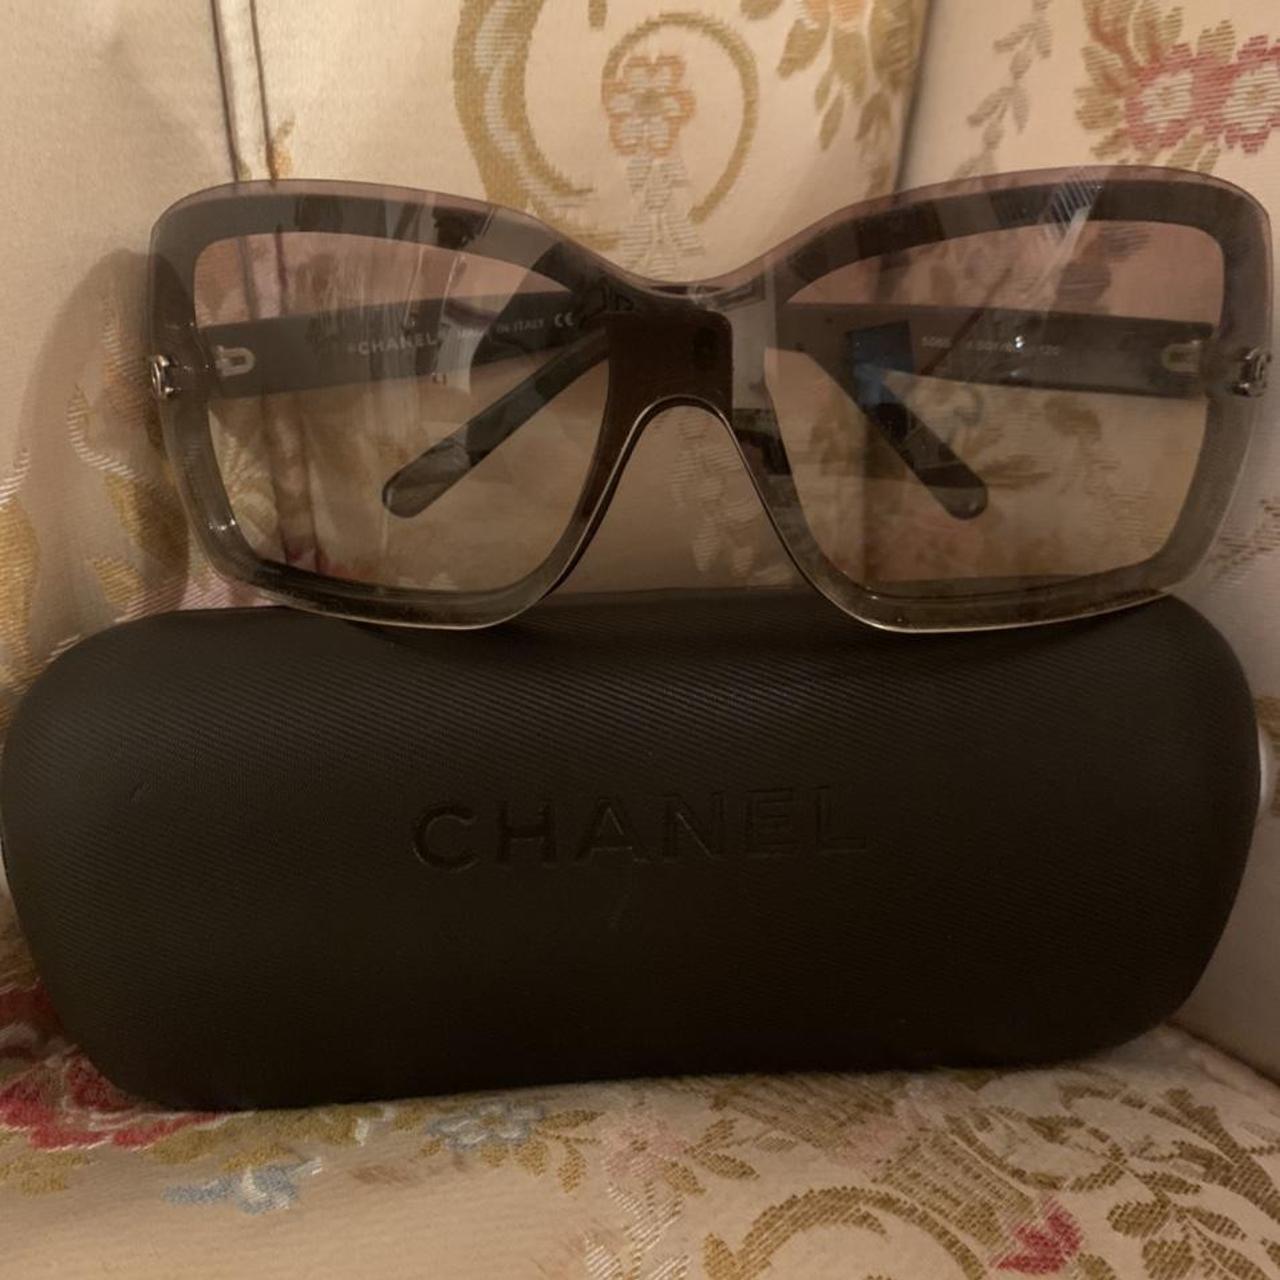 Authentic Chanel Sunglasses, monogram CC logos, - Depop